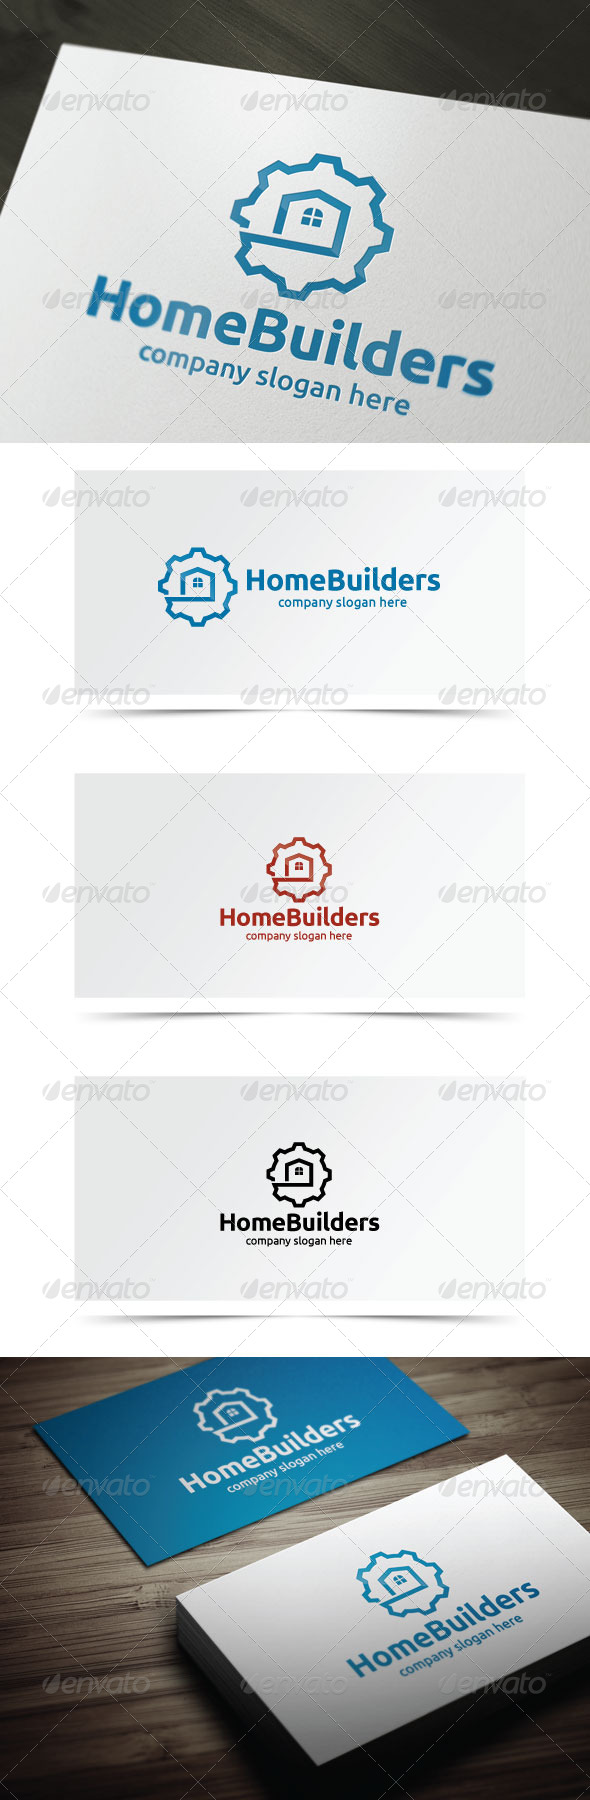 Home Builders